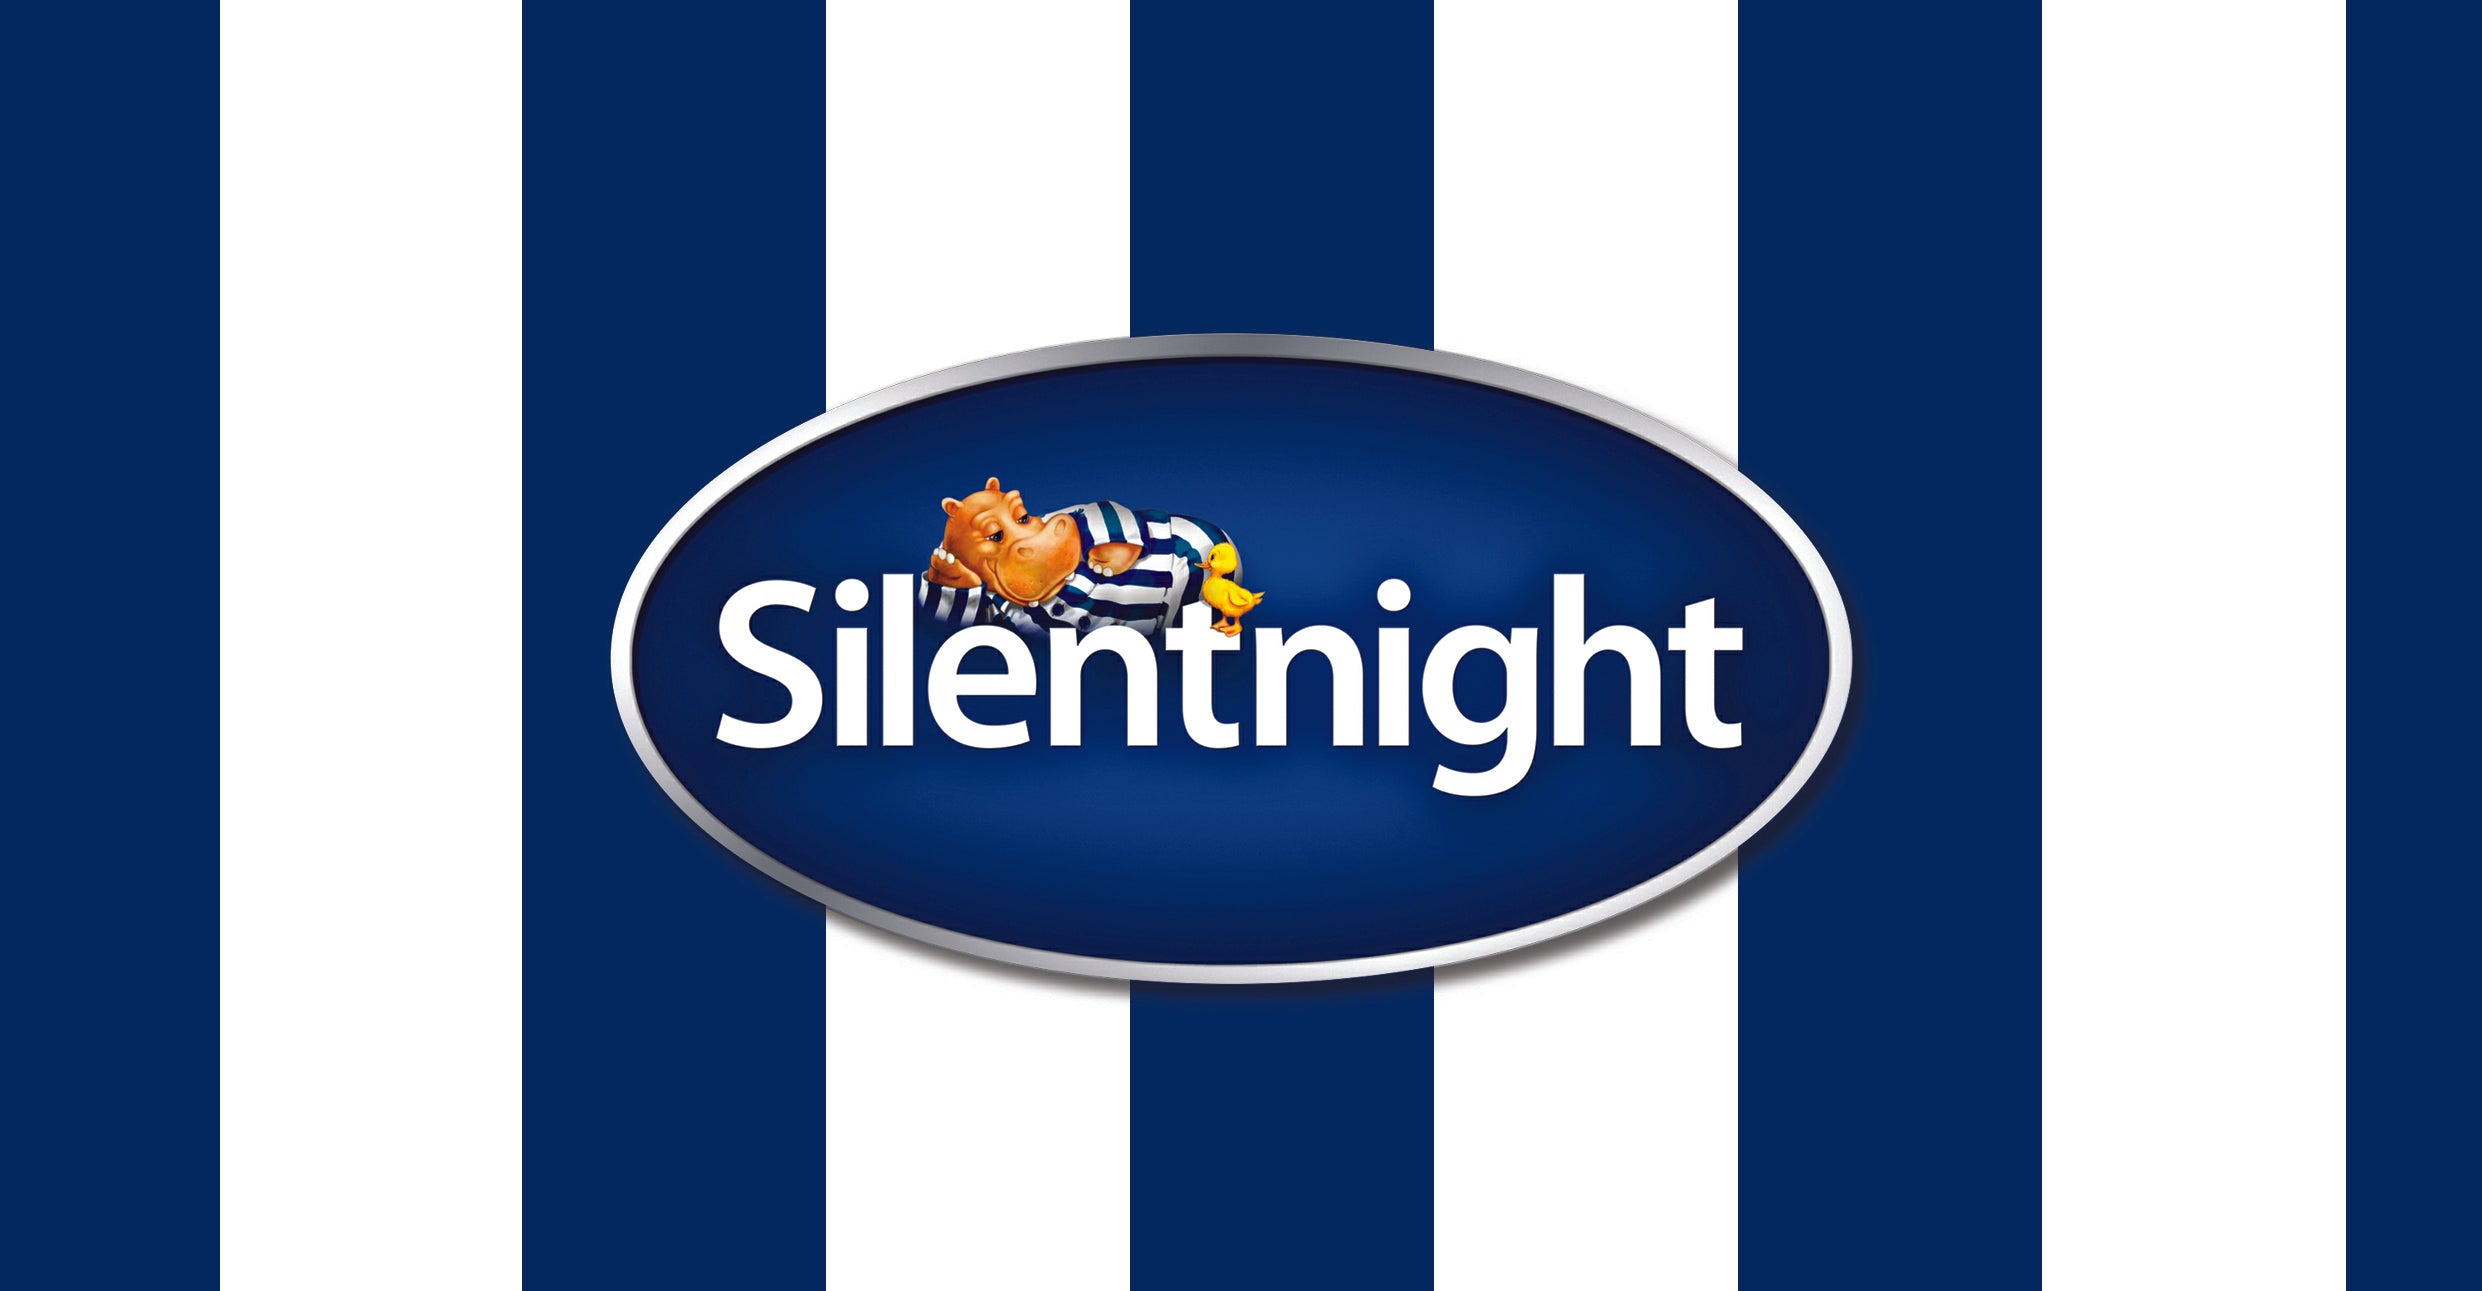 Silentnight - The UK's Most Trusted Sleep Brand